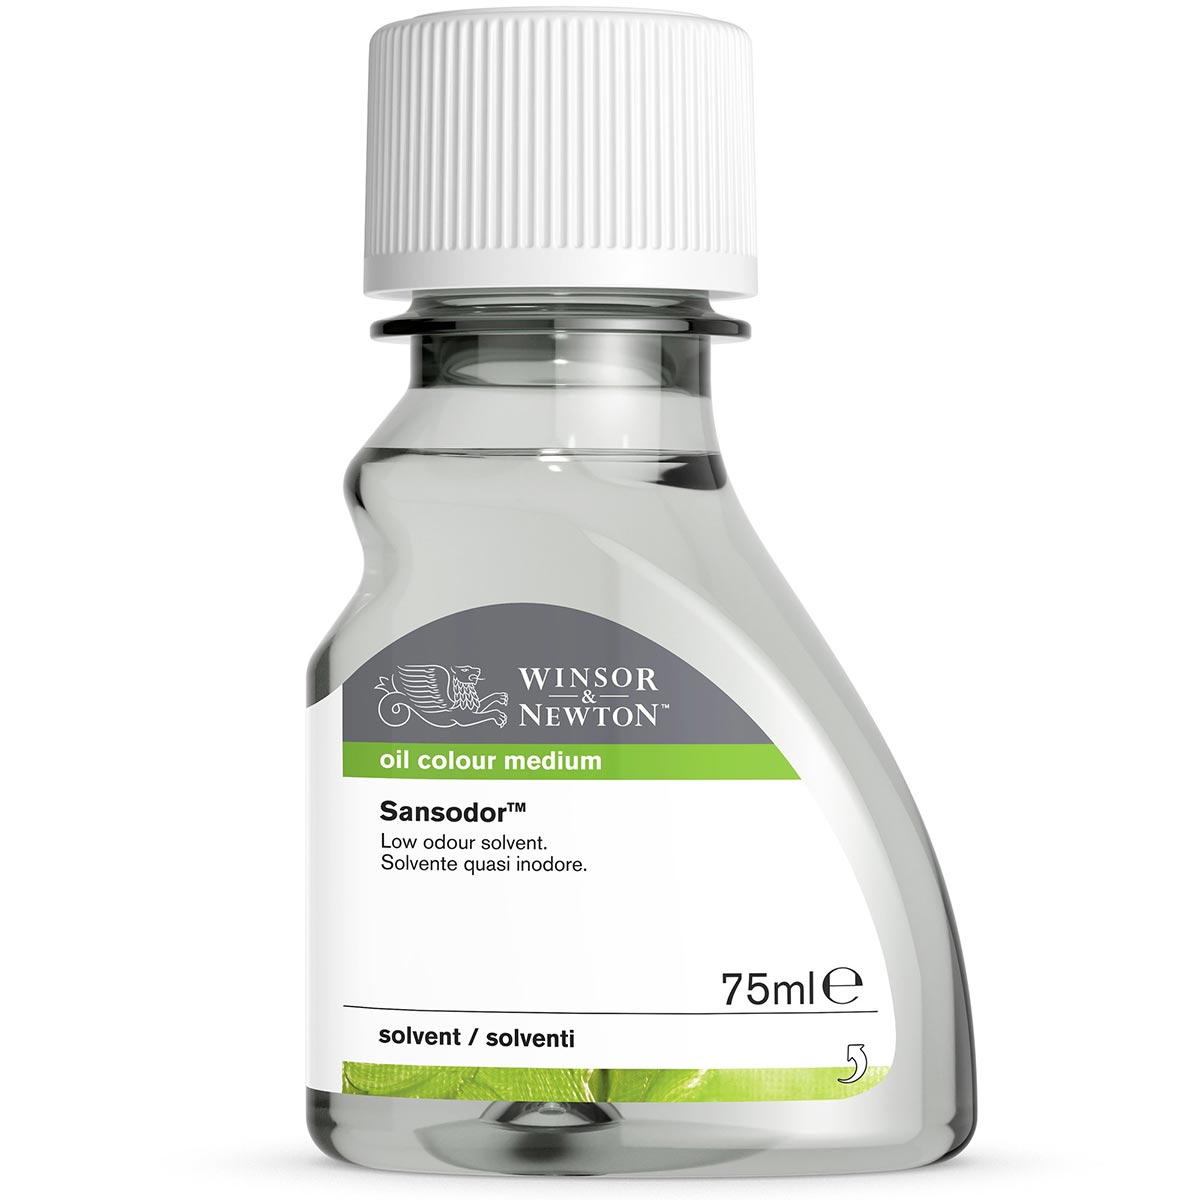 Winsor et Newton - Sansodor Low Odor Solvent Cleaner - 75 ml -